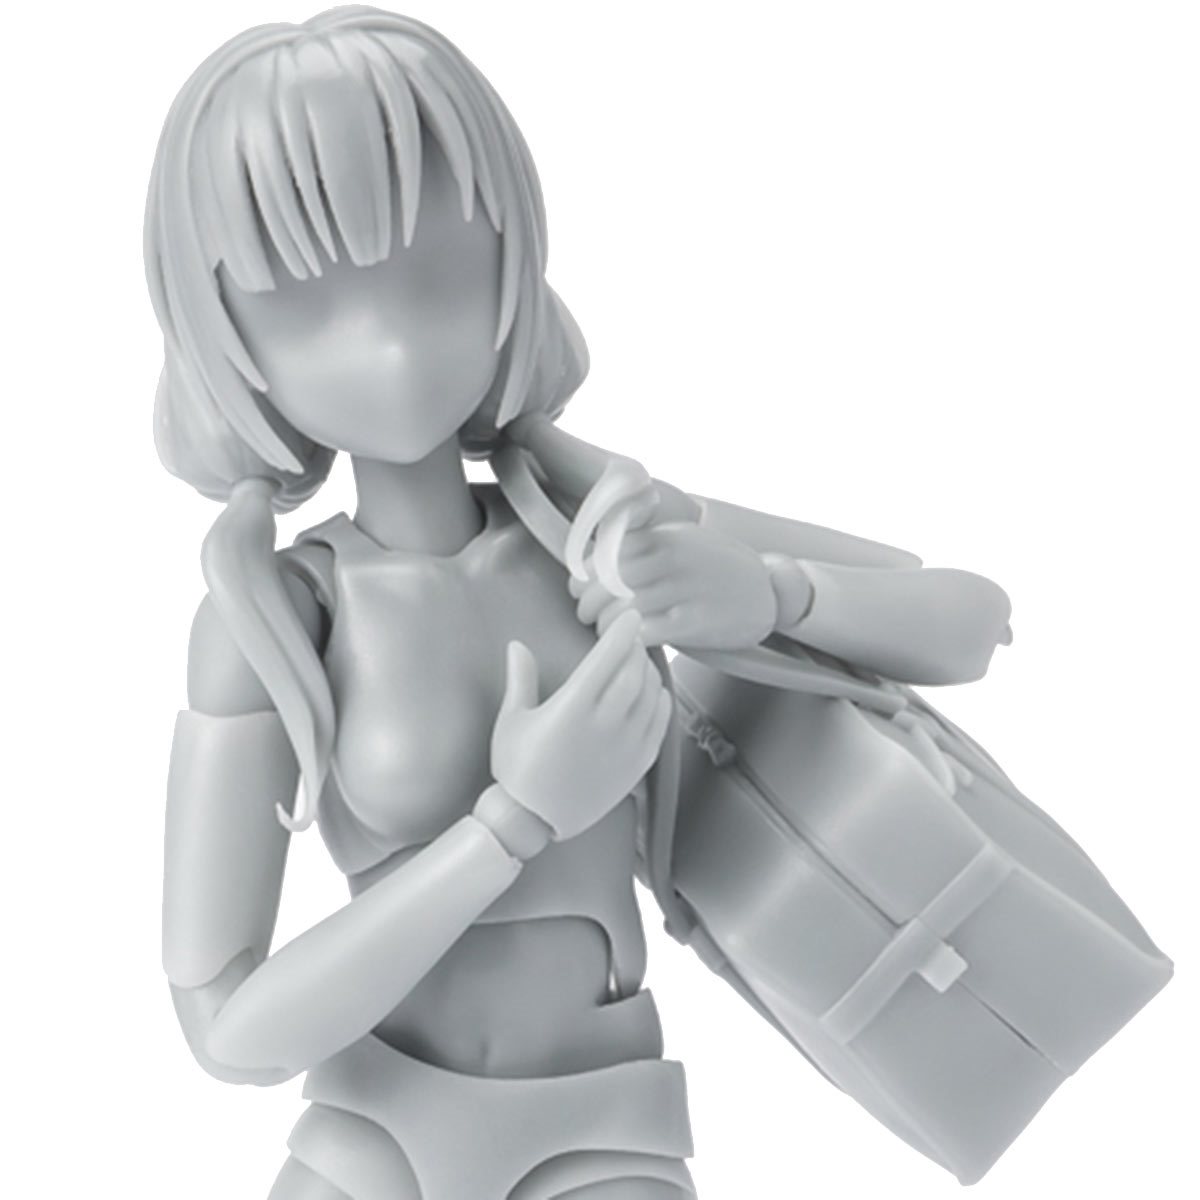 Body-Kun Ken Sugimori DX Edition Set (Gray Color Ver) S.H.Figuarts